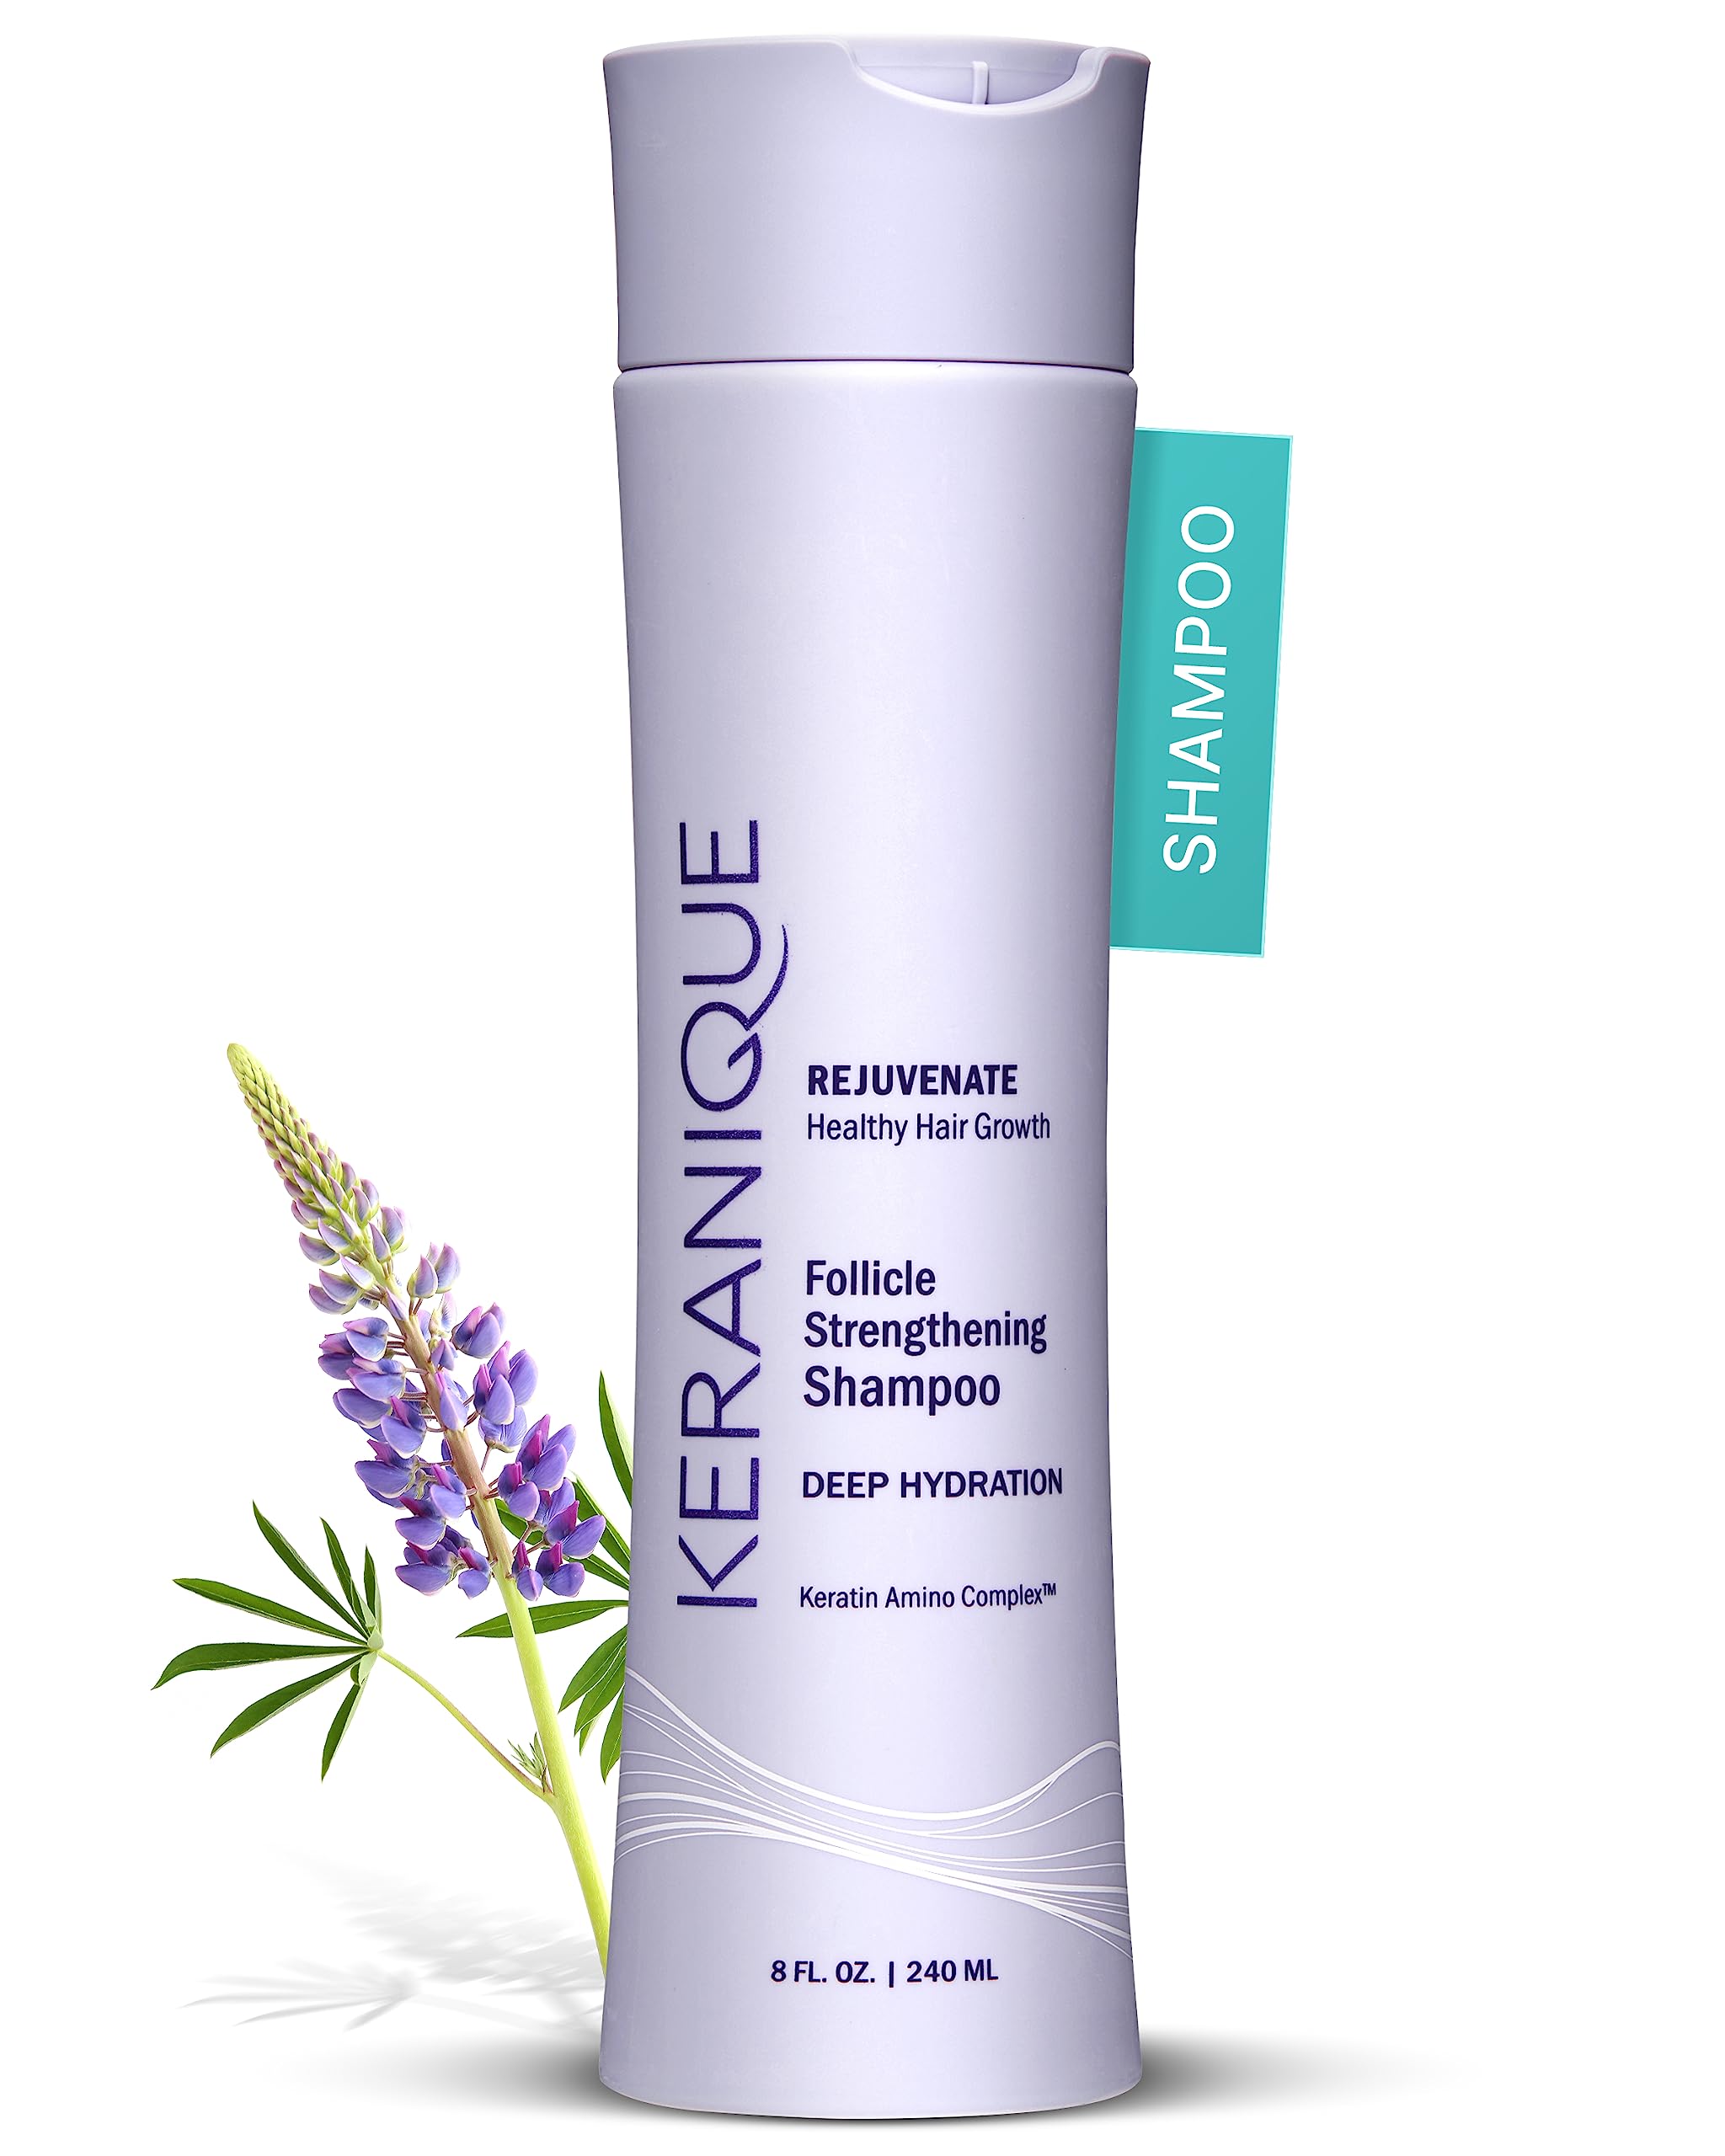 Keranique Deep Hydration Scalp Stimulating Shampoo for Thinning Hair, 8 Fl Oz